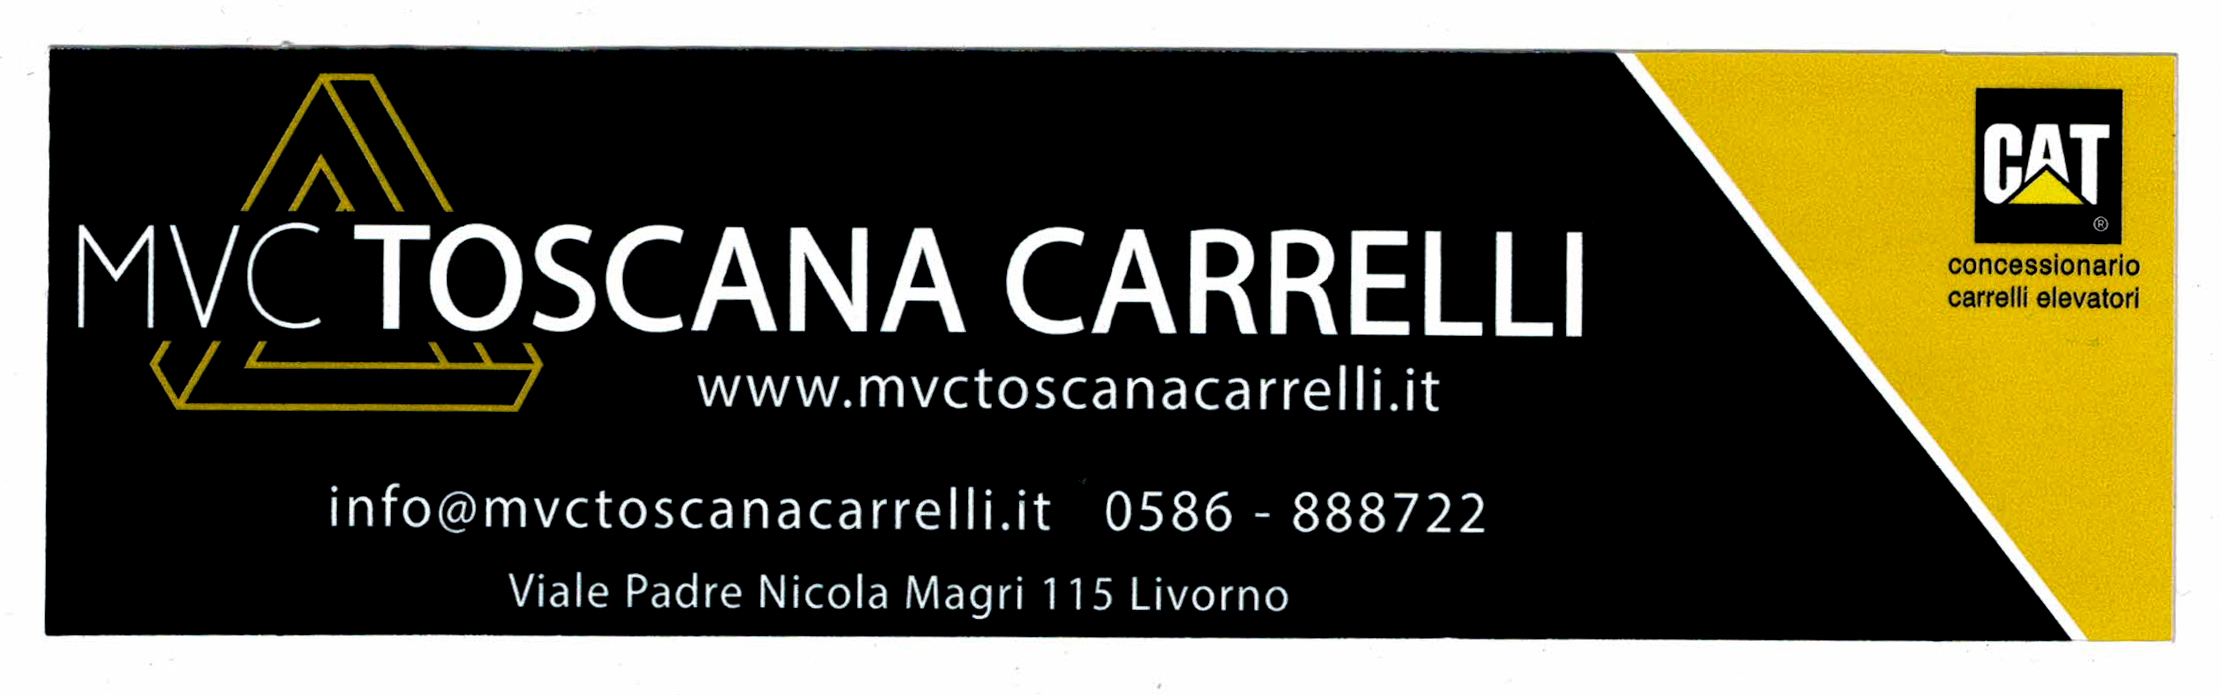 TOSCANA CARRELLI logo